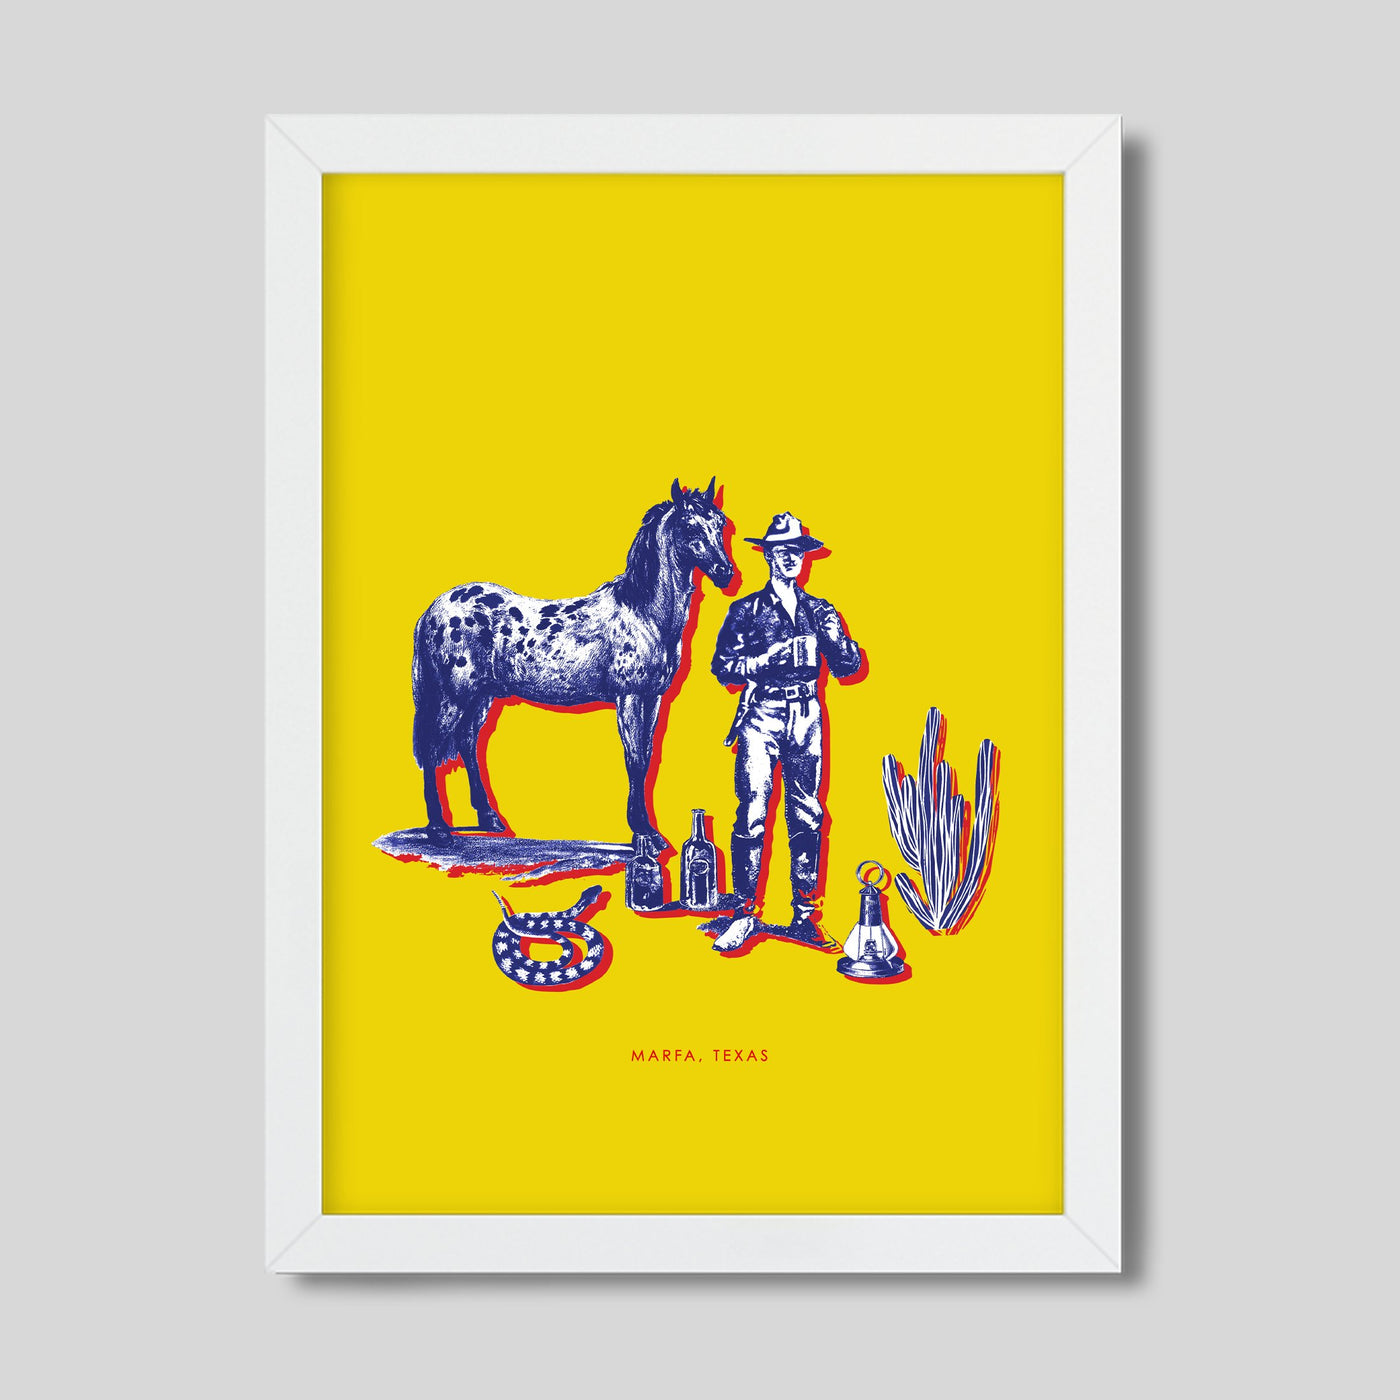 Gallery Prints Yellow / 8x10 / White Frame Marfa Cowboy Print Katie Kime